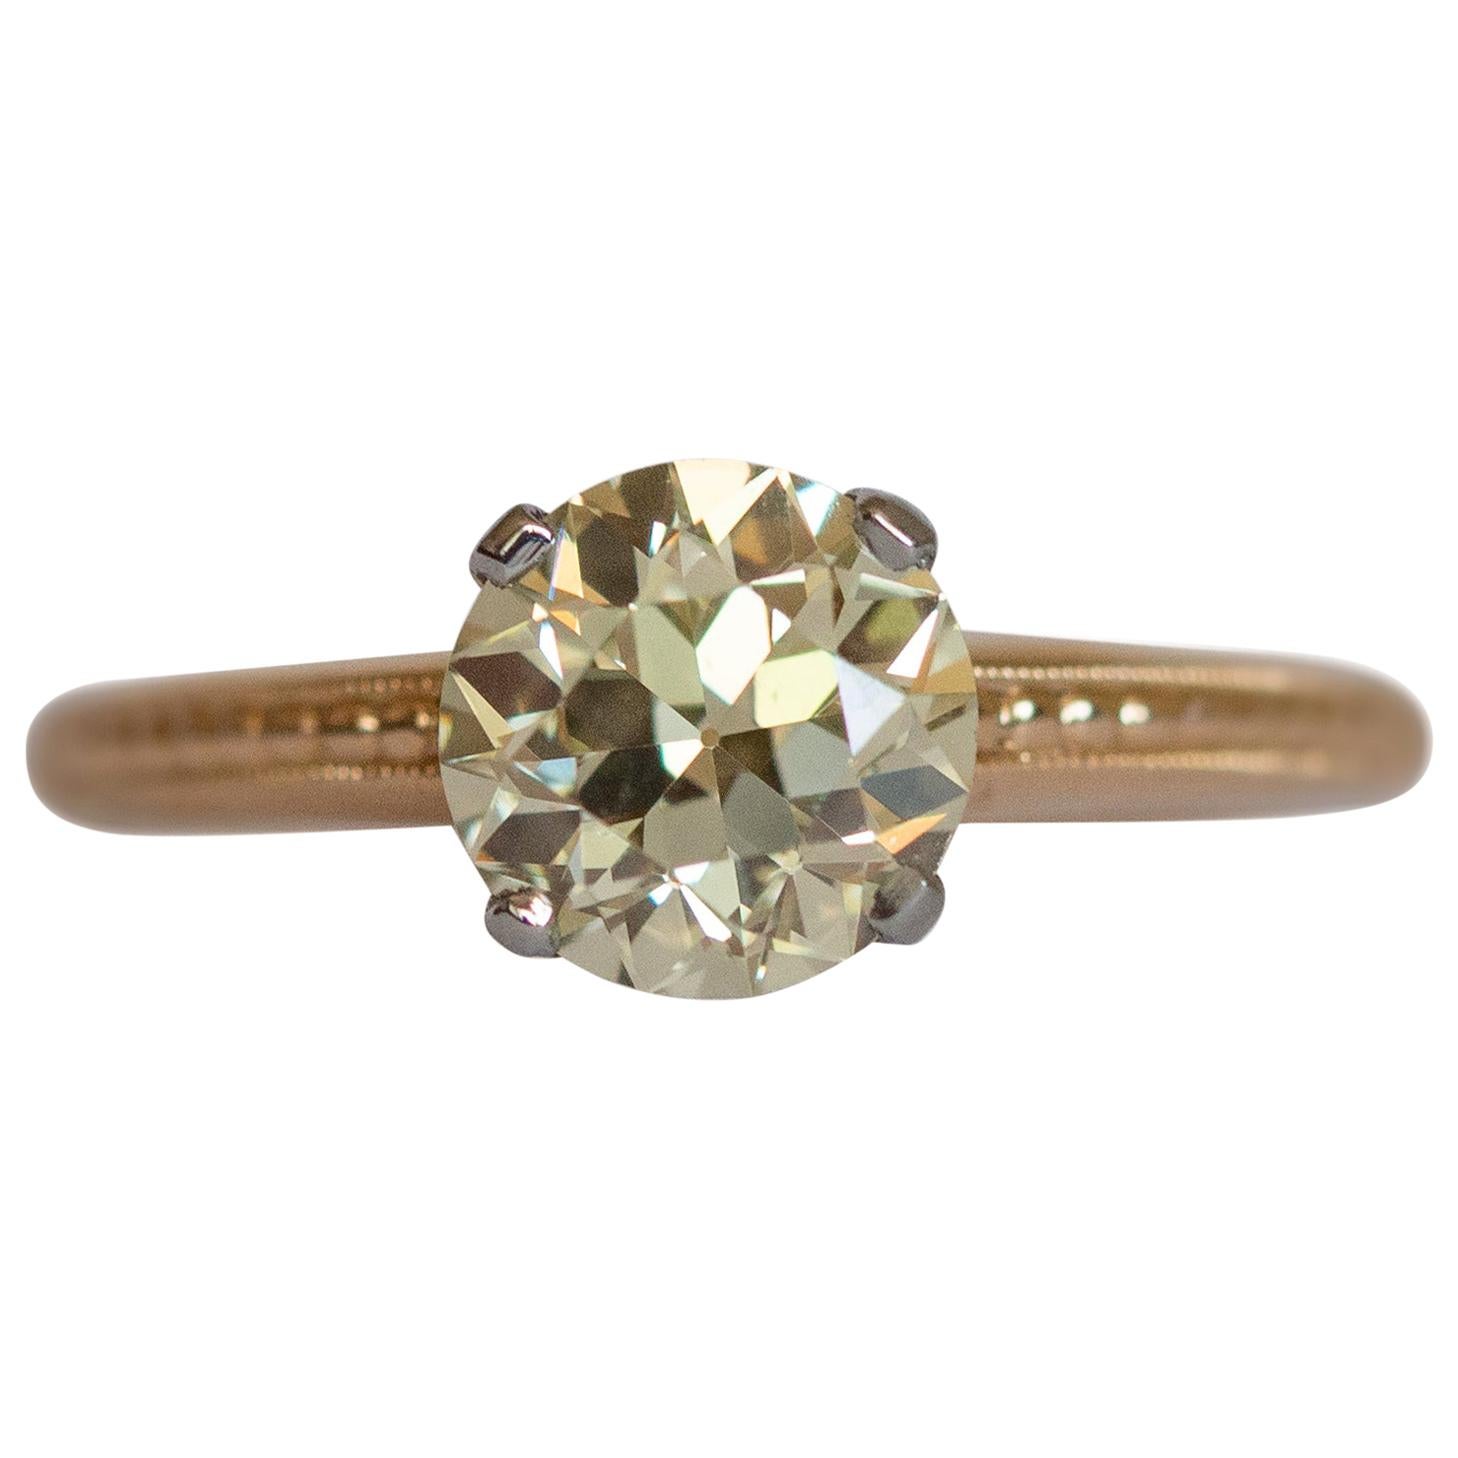 1.50 Carat Diamond Yellow Gold Engagement Ring